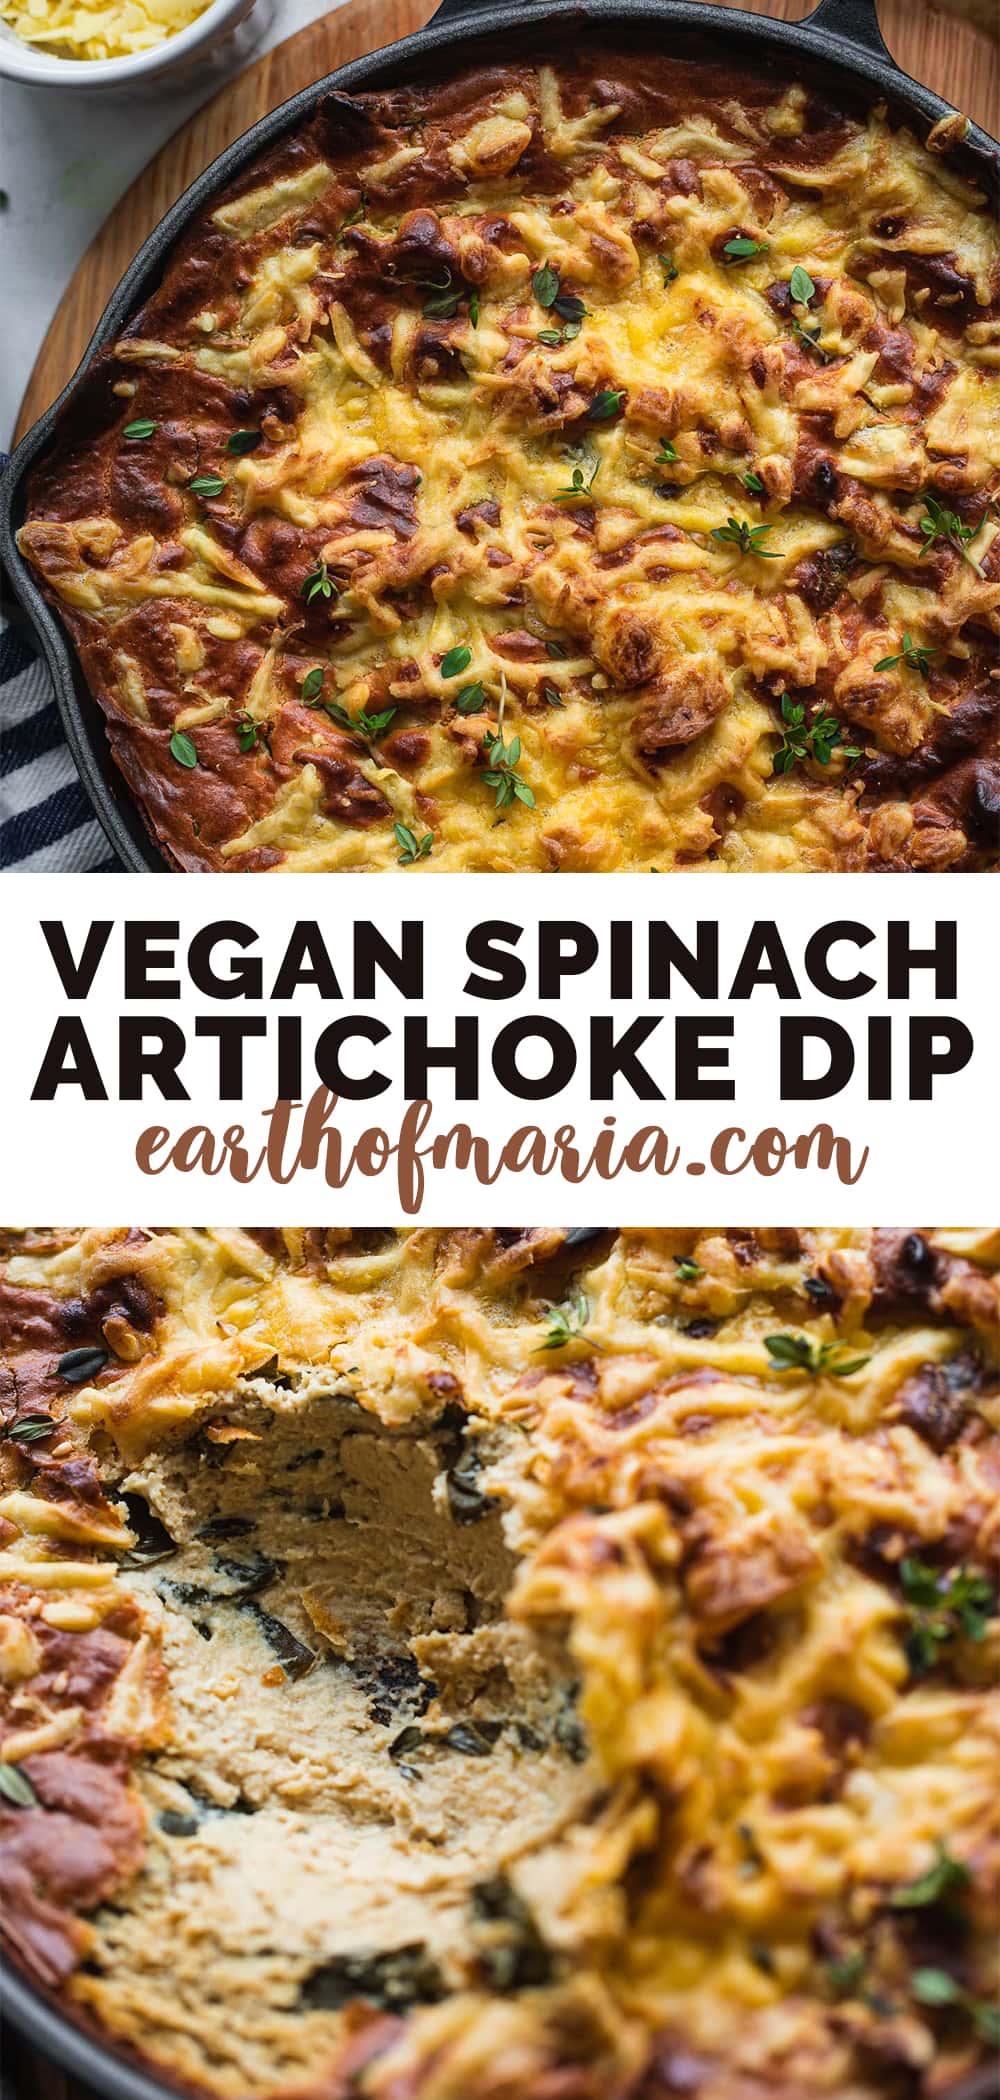 Vegan spinach artichoke dip 